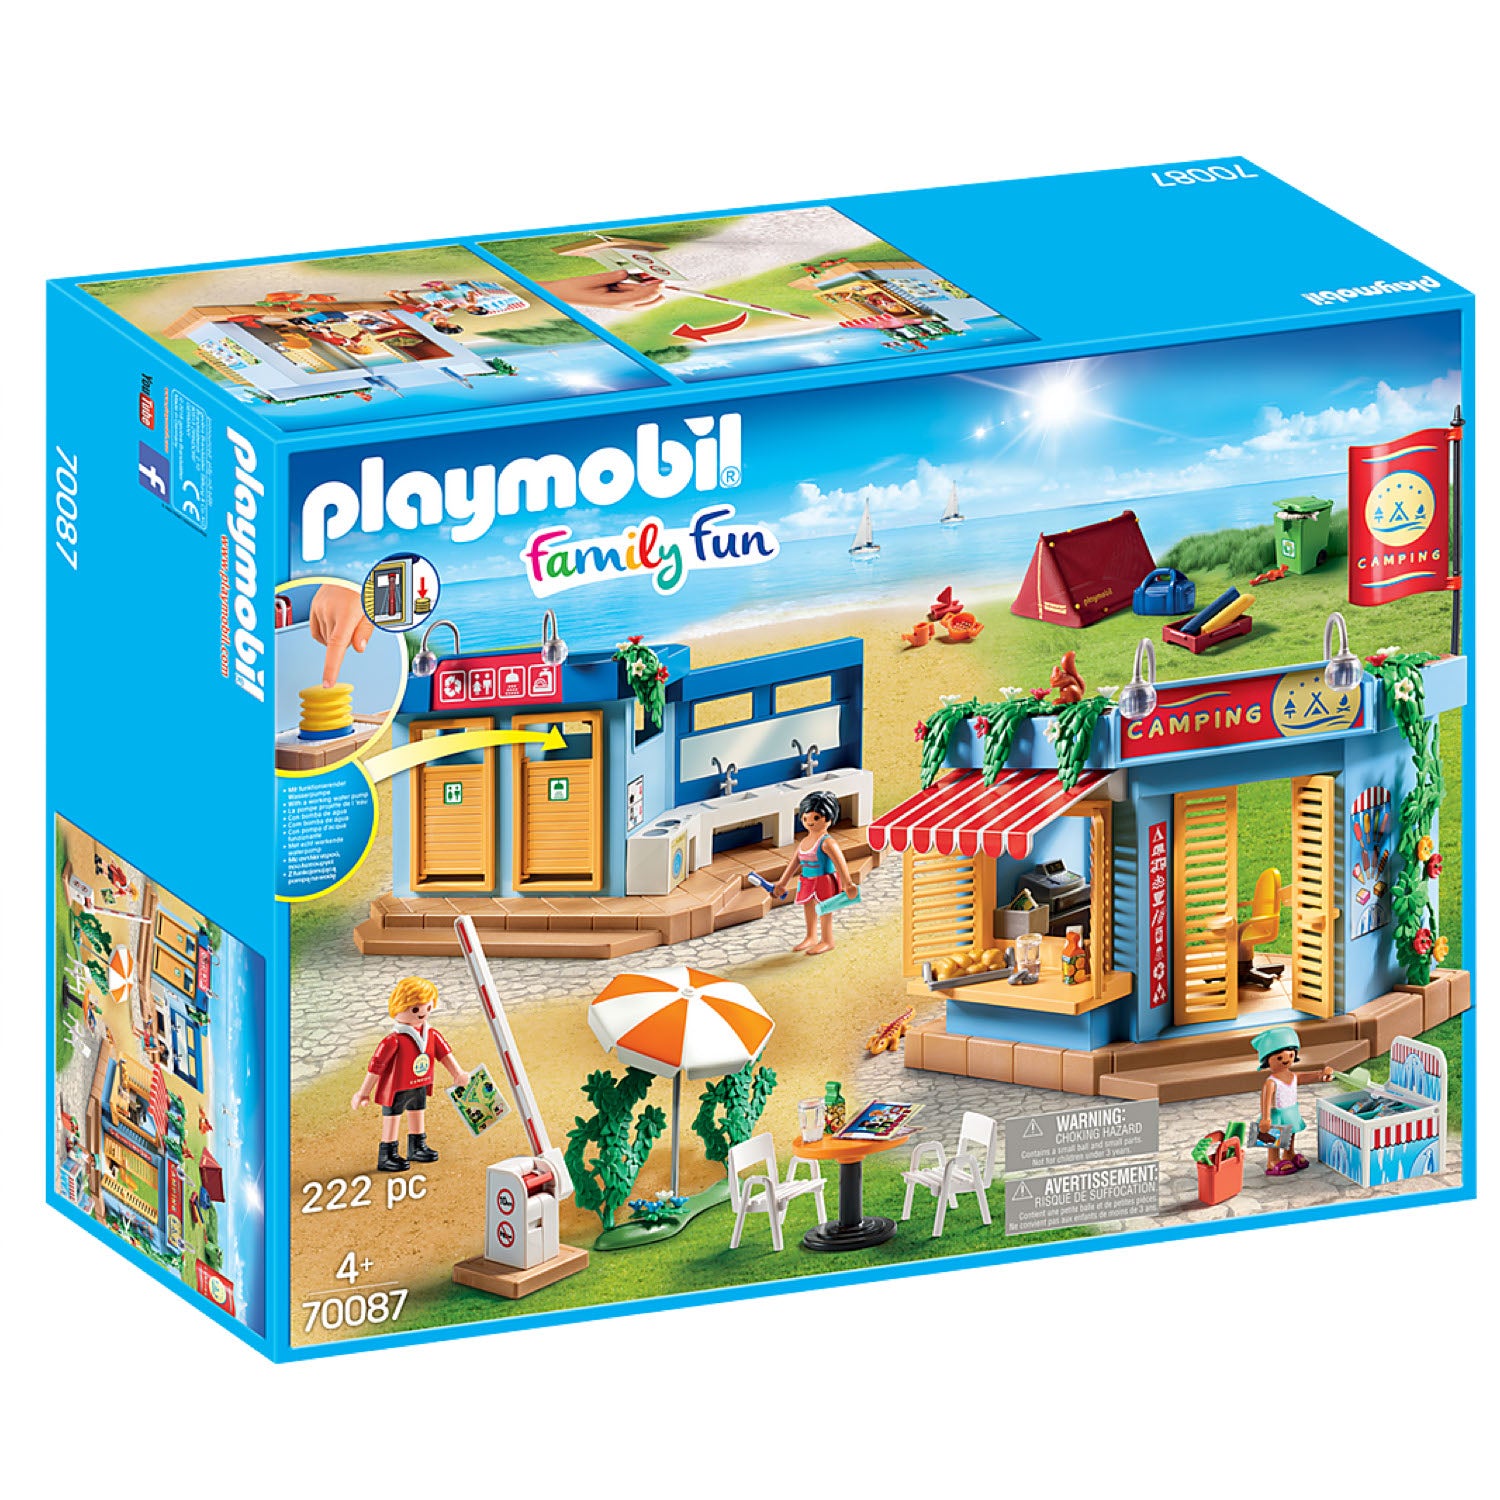 Maison Playmobil transportable Canton Jura 